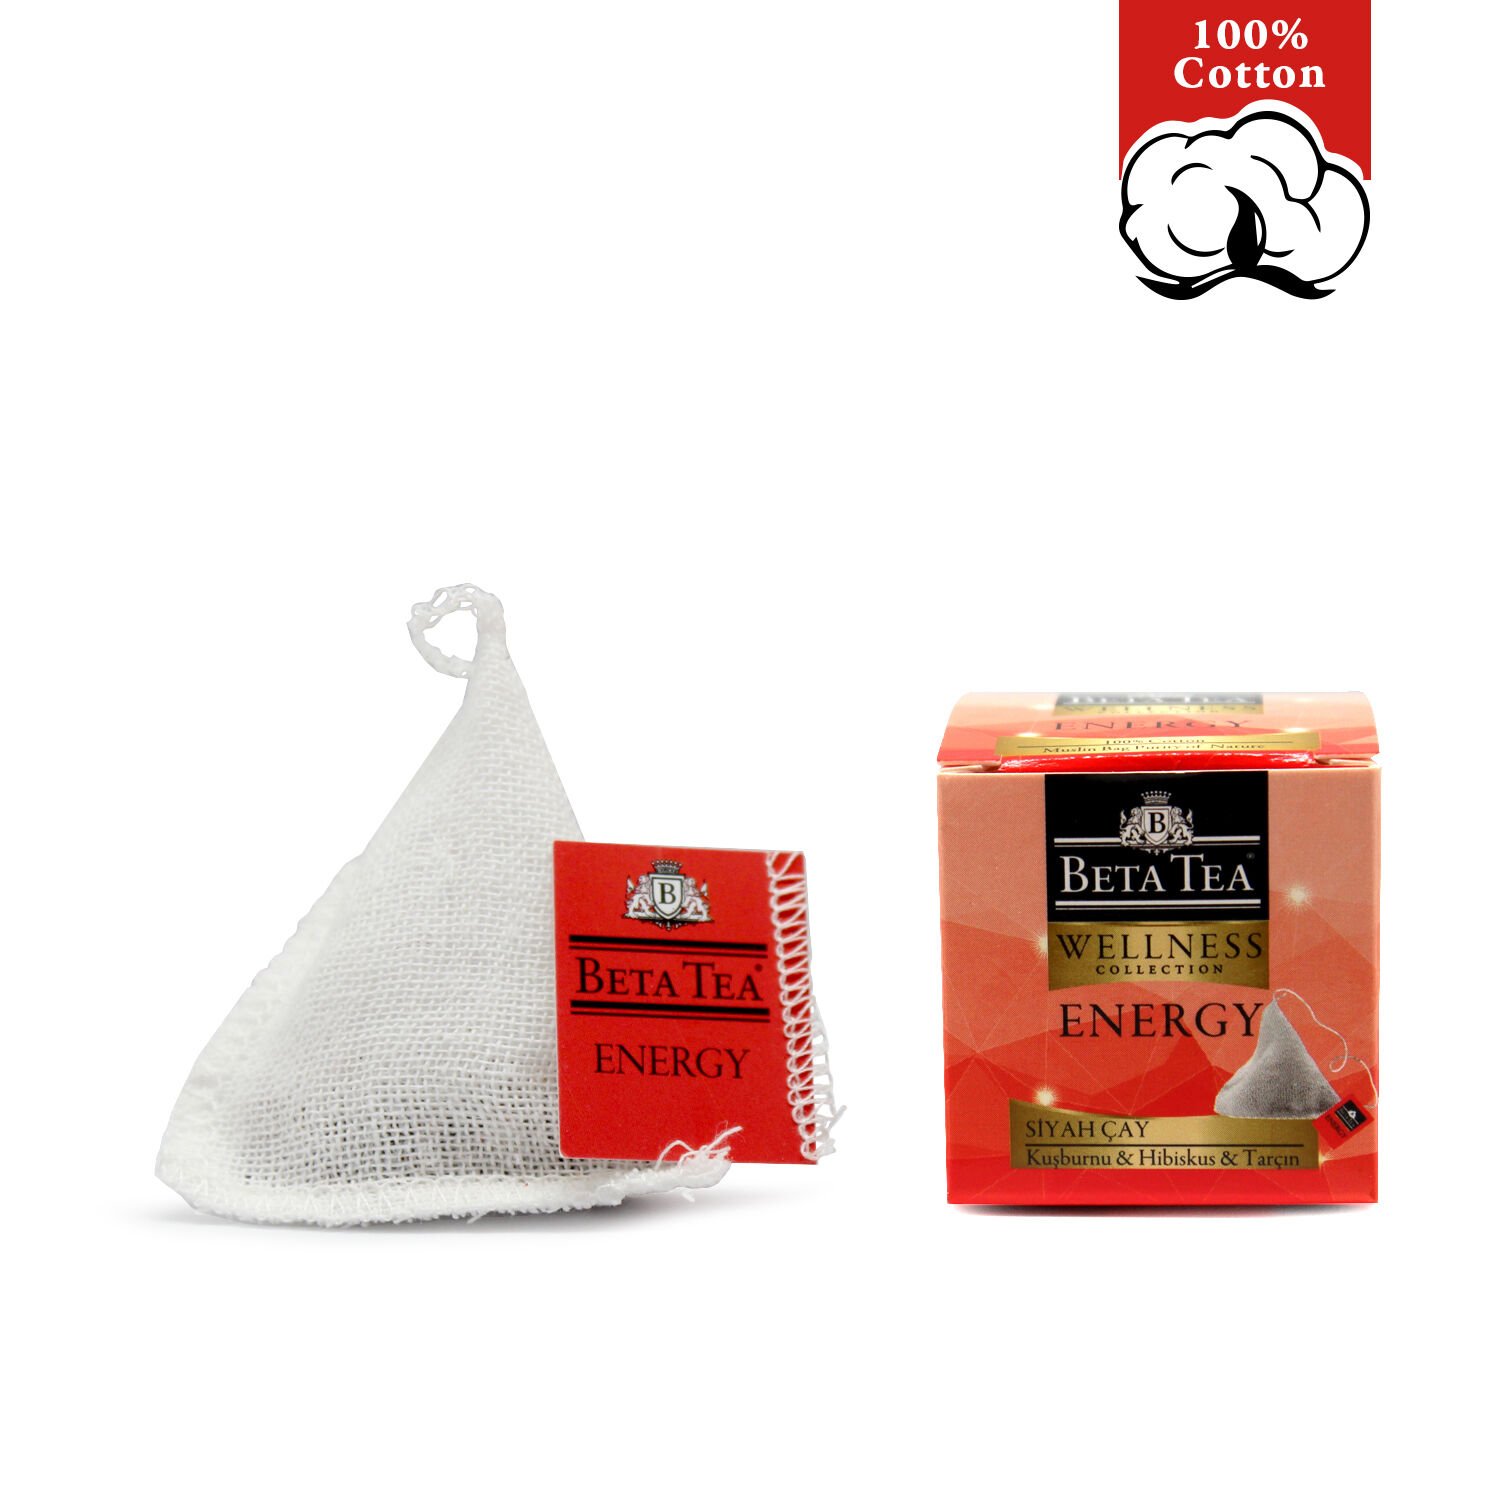 Beta Tea Wellness Energy Müslin Piramit Çay 2 gram (%100 Doğal Pamuk Dokuma)